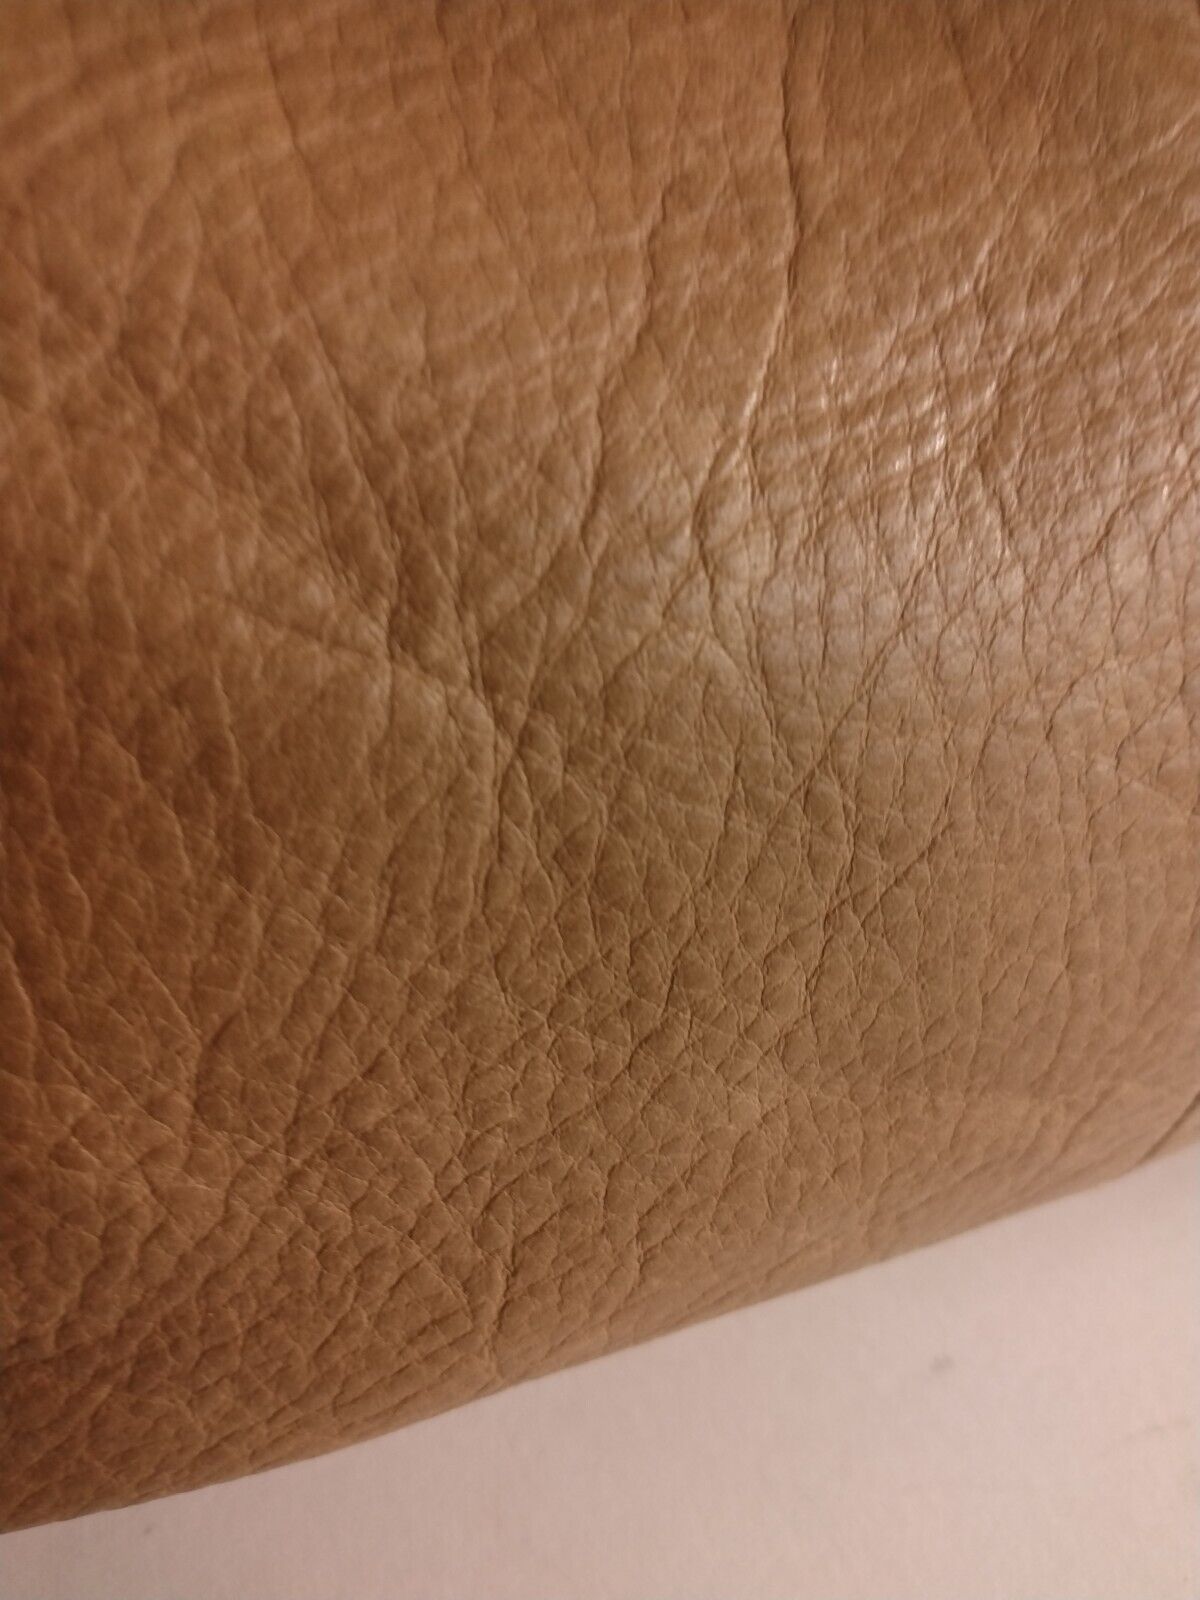 B Makowsky Tan Leather Purse - image 7